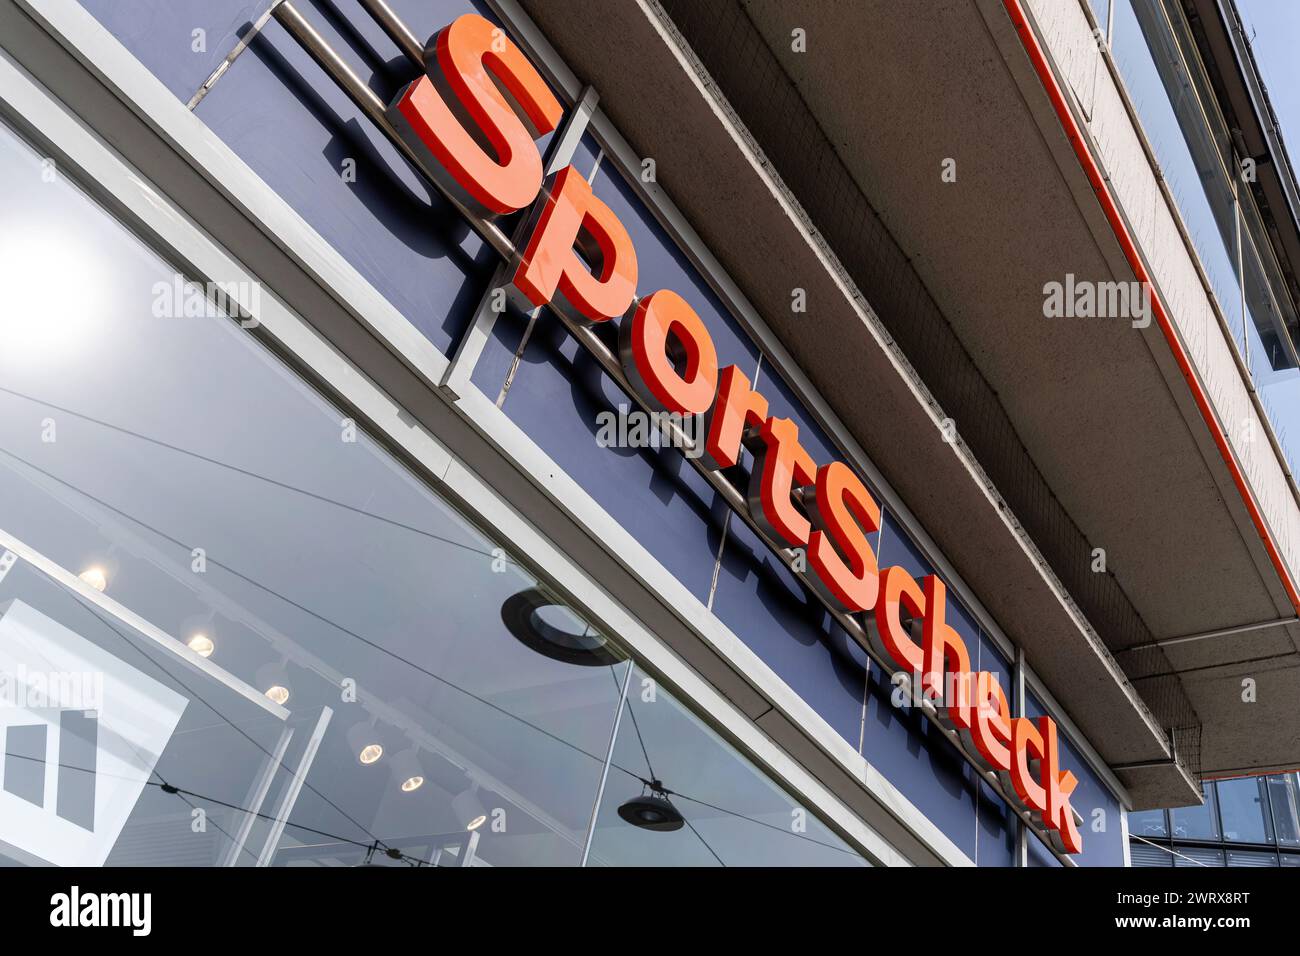 SportScheck store in Bielefeld, Germany Stock Photo